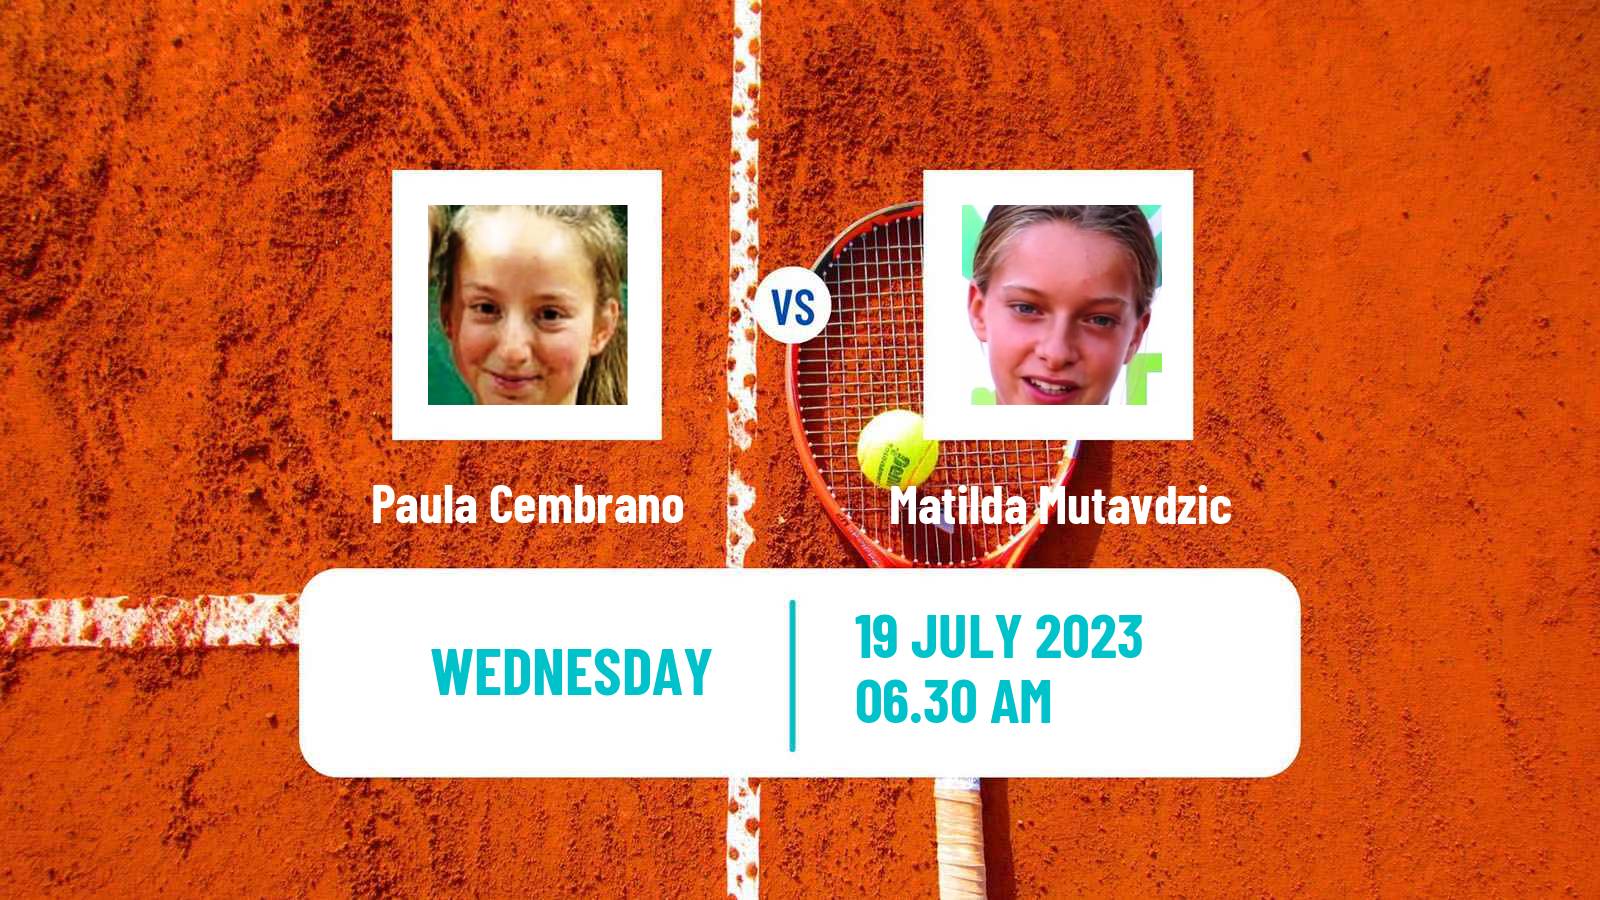 Tennis ITF W15 Les Contamines Montjoie Women Paula Cembrano - Matilda Mutavdzic